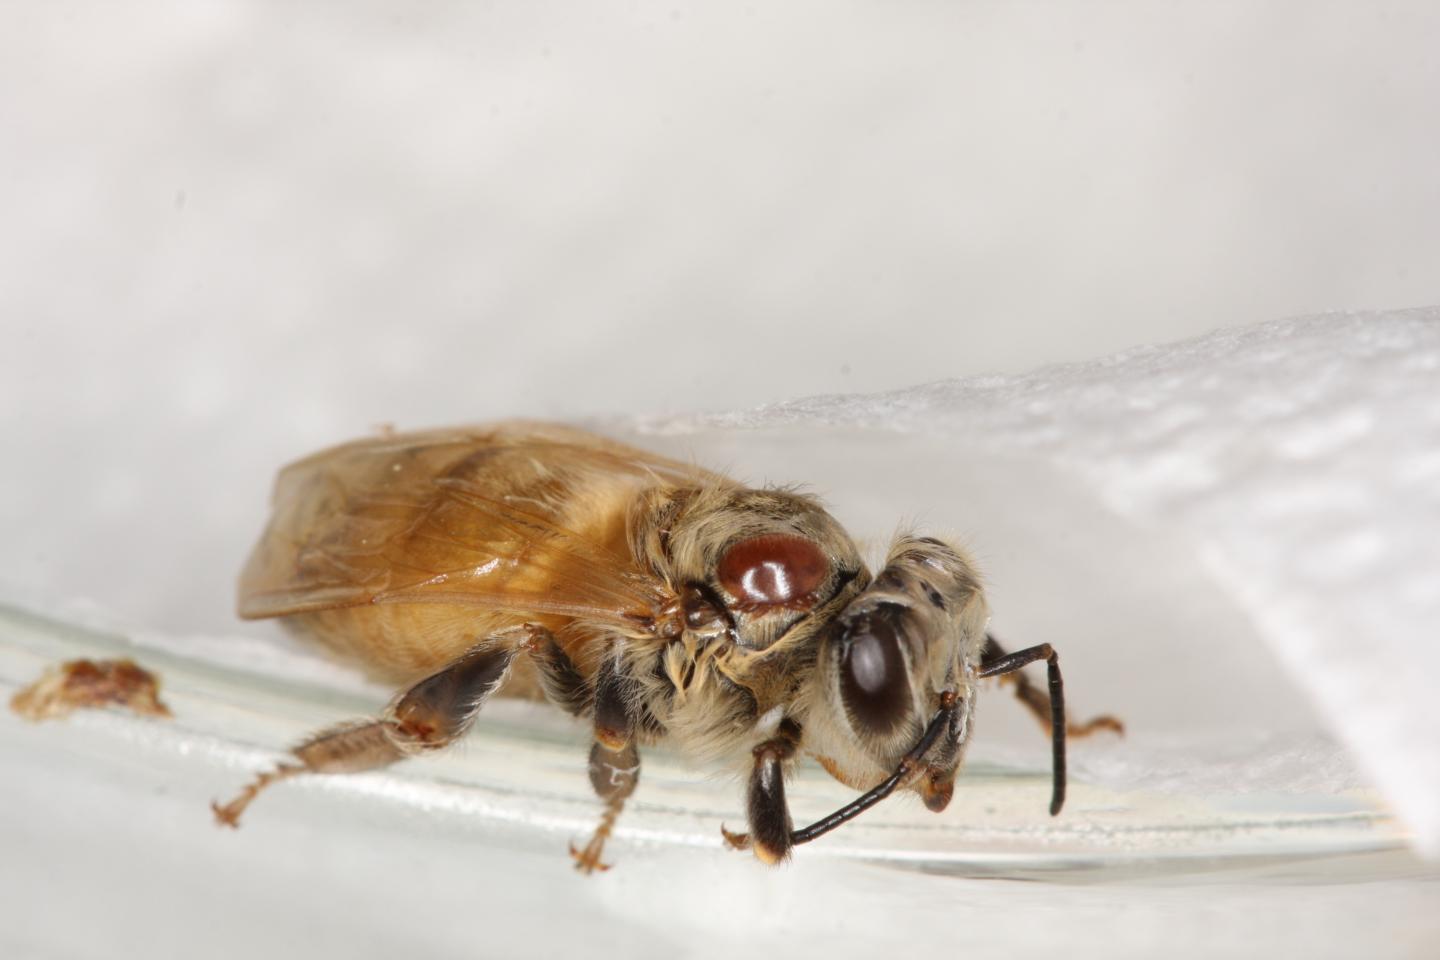 Bee with <em>Varroa destructor</em> Mite